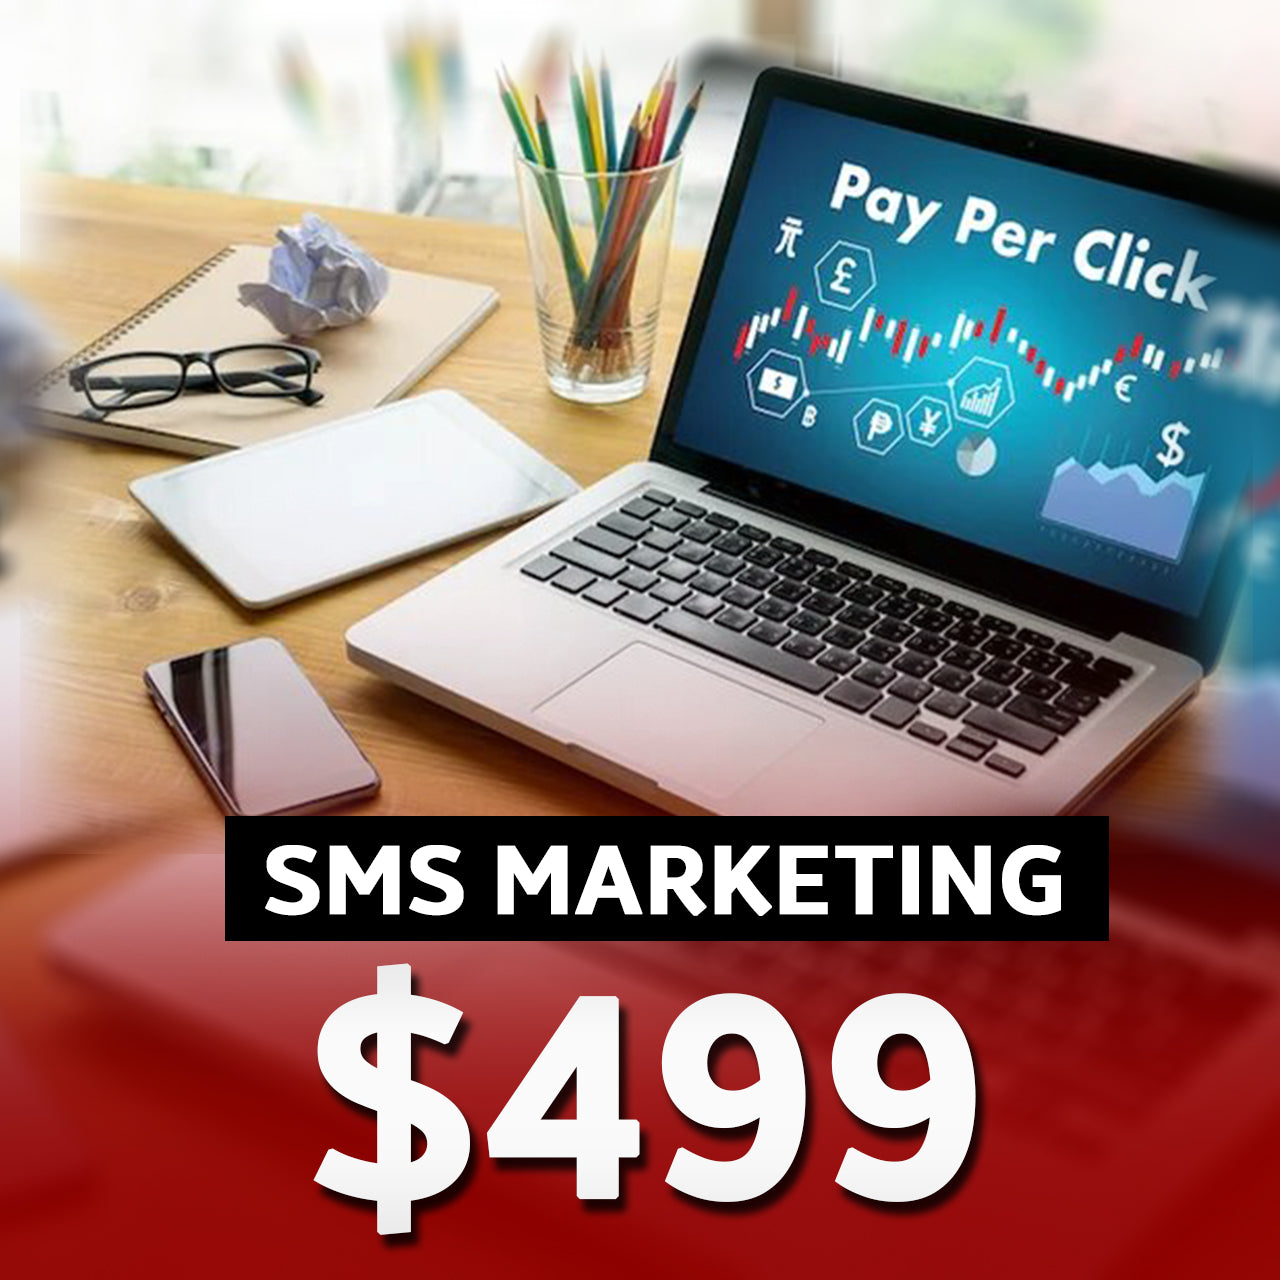 sms marketing-$499